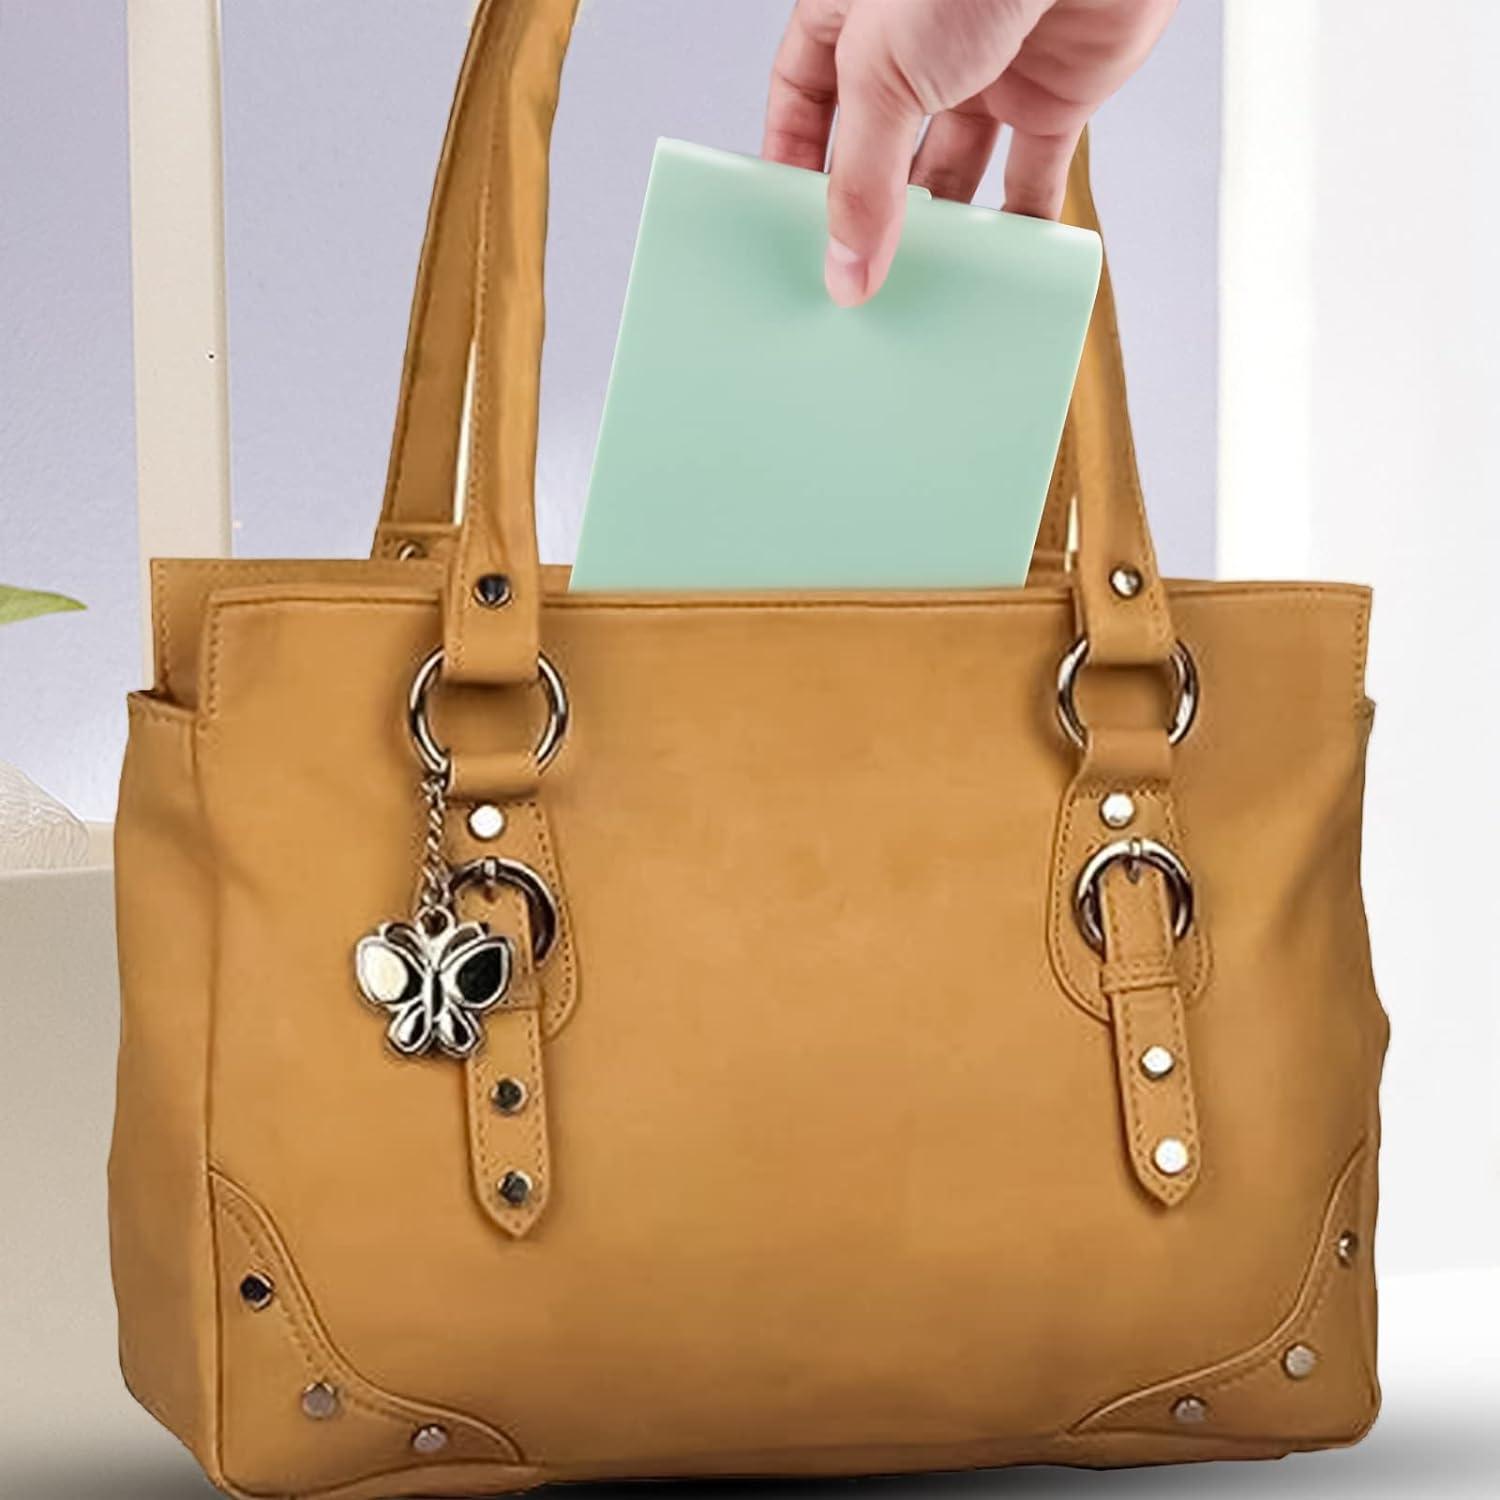 ZZMY Leather (Taupe/Beige) Crossbody/Handbag With Detachable Shoulder Strap  | eBay